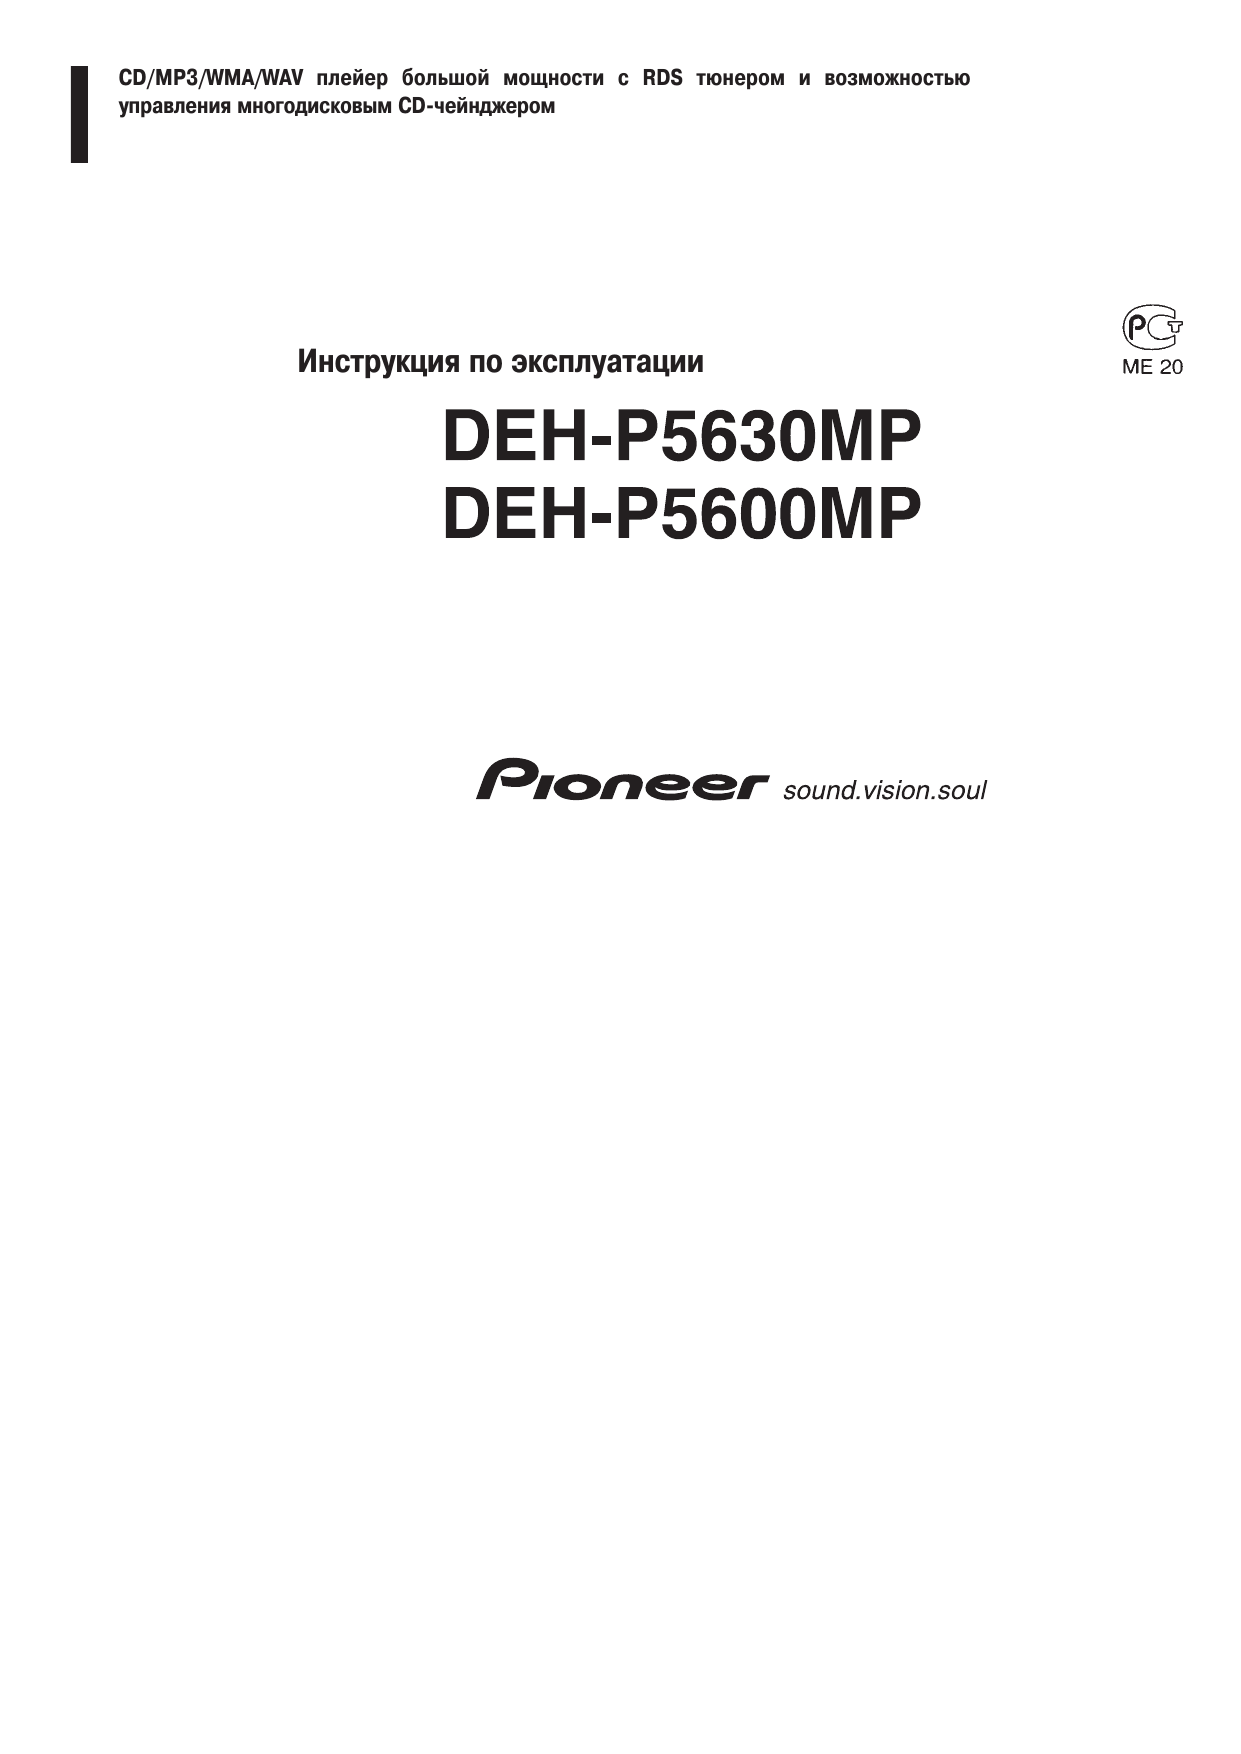 Дж инструкция. Pioneer deh-p5630mp. Pioneer deh-p5600mp. Pioneer deh-p5600mp инструкция. Pioneer deh 5630mp инструкция.